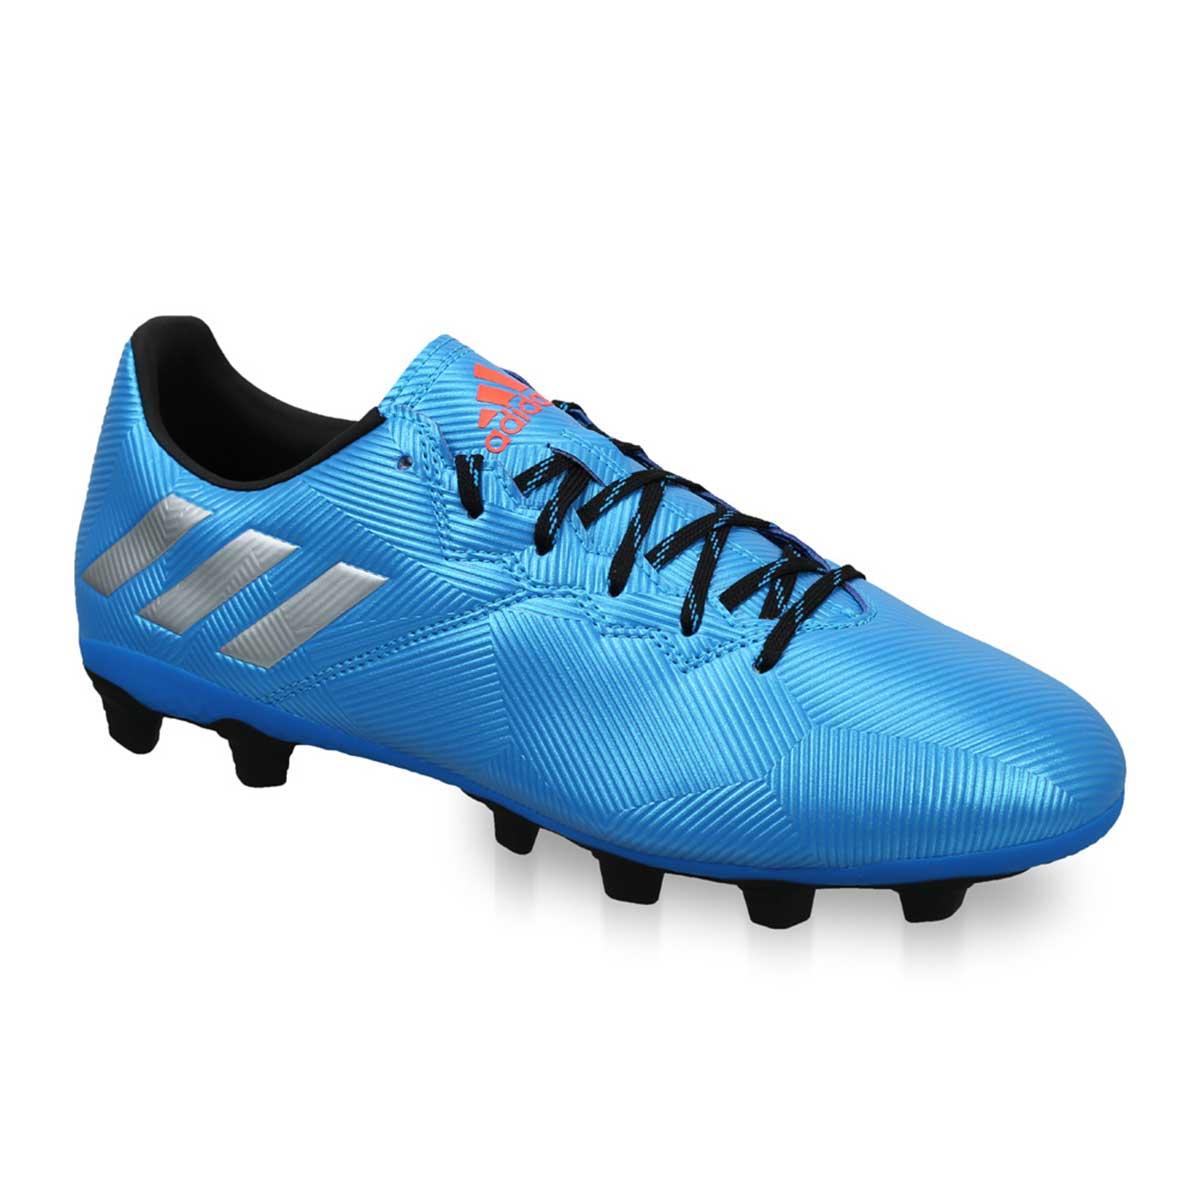 Adidas Messi 16.4 FXG Football (Blue/Silver/Black) Online